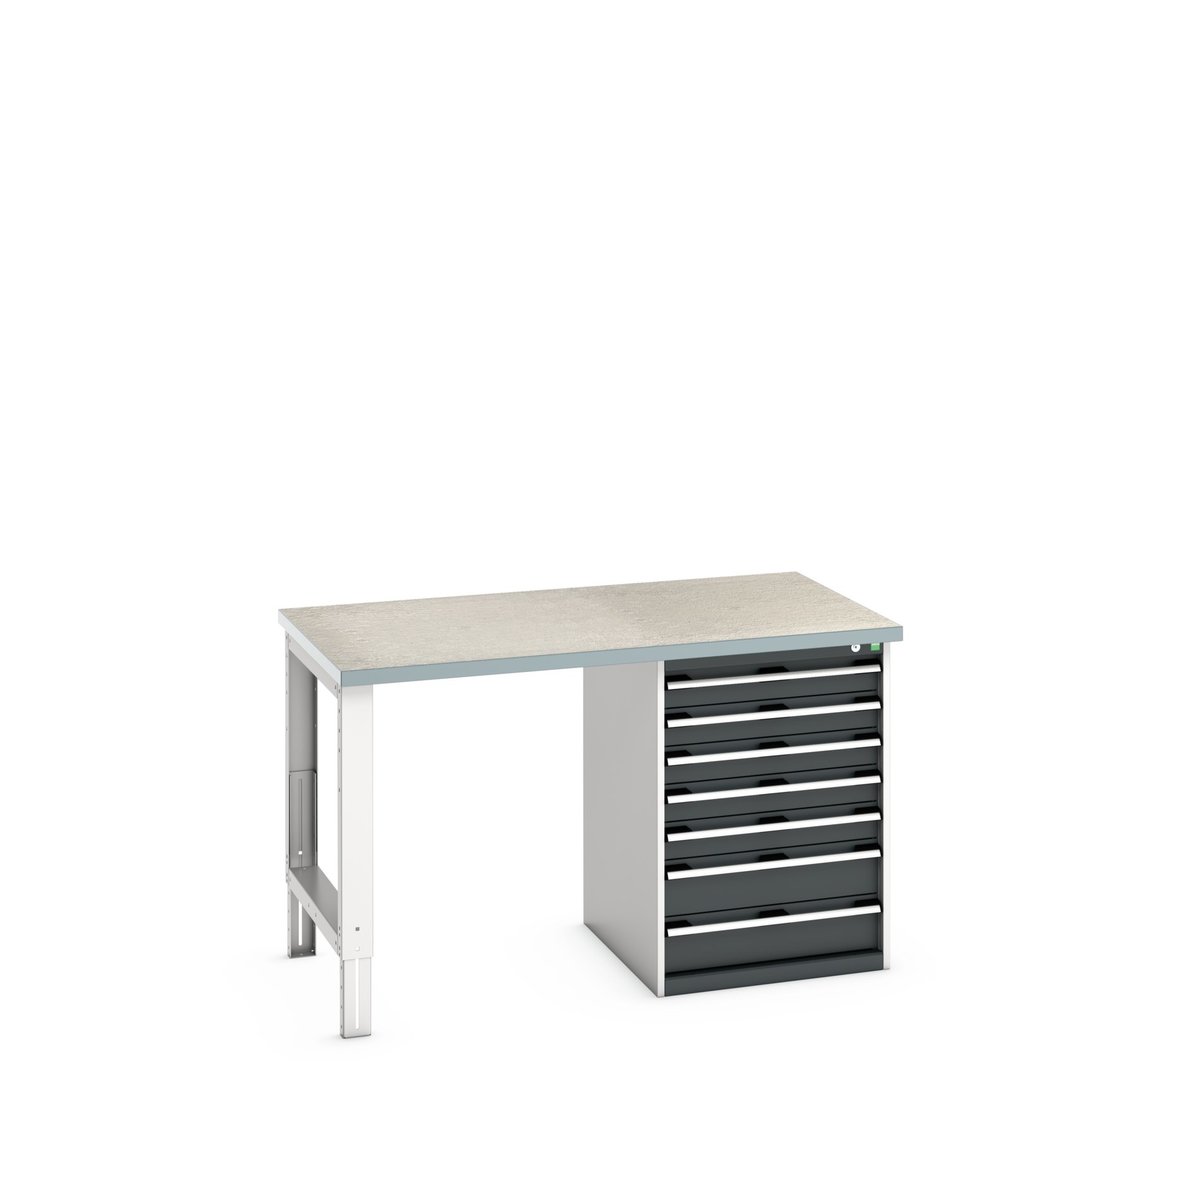 41003499. - cubio pedestal bench (lino)